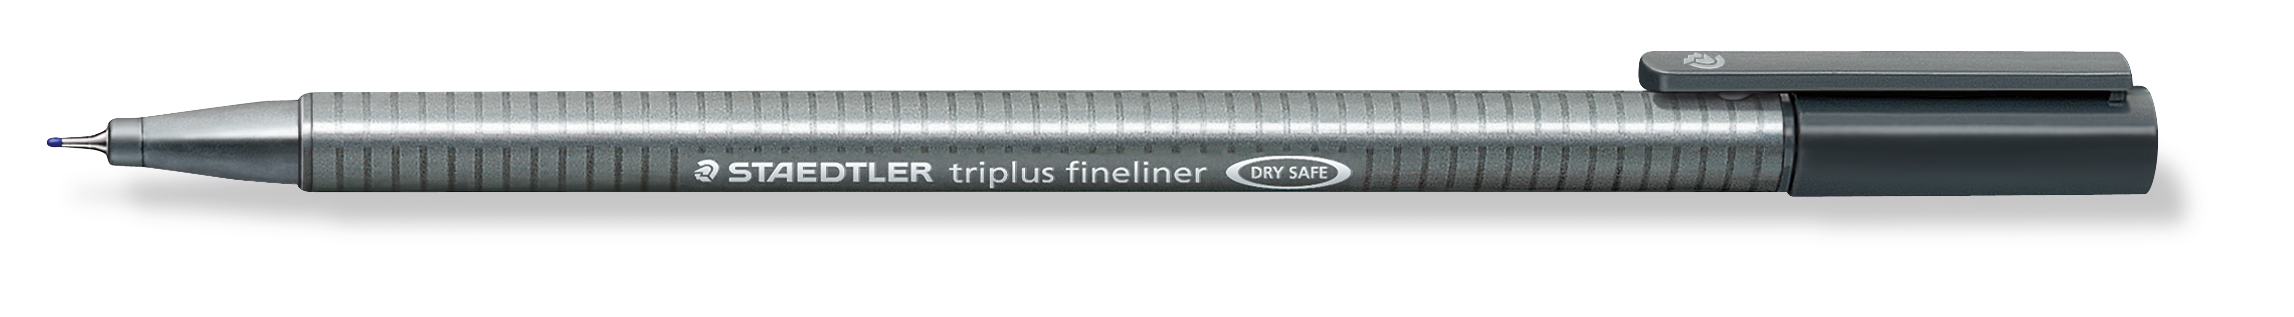 STAEDTLER Triplus Fineliner 0,3mm 334-8 gris